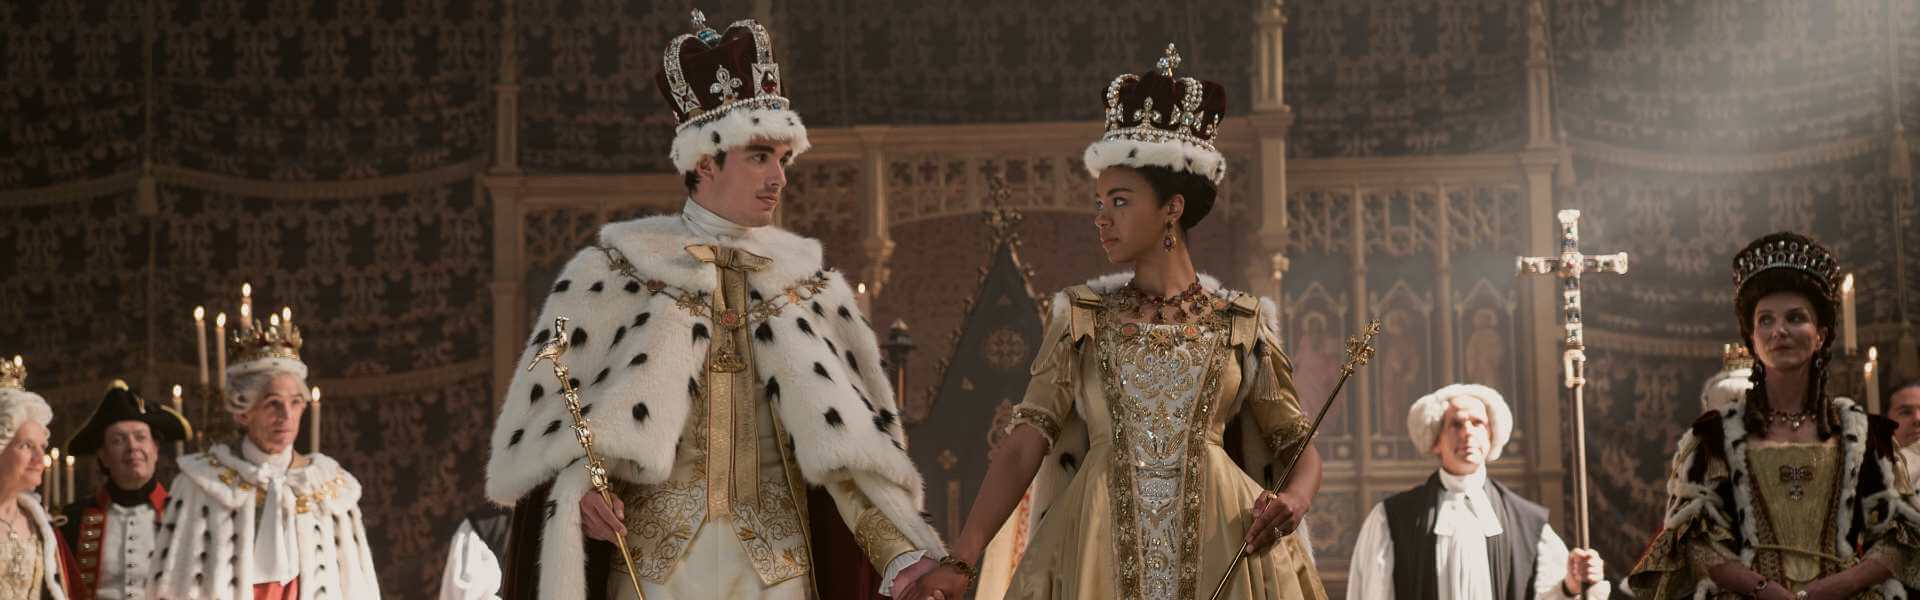 India Amarteifio e Corey Mylchreest como Rainha Charlotte e Rei George no spin-off de Bridgerton